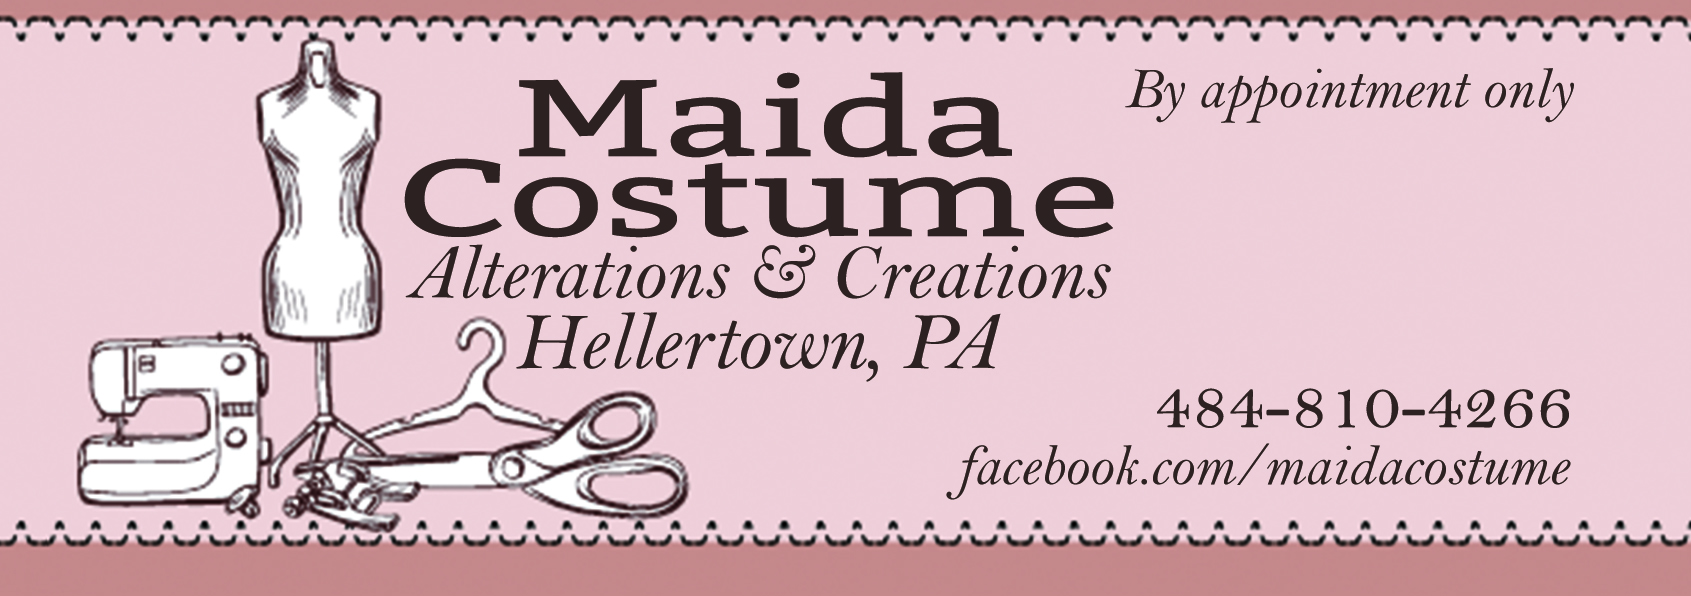 Maida Costume Alterations & Creations